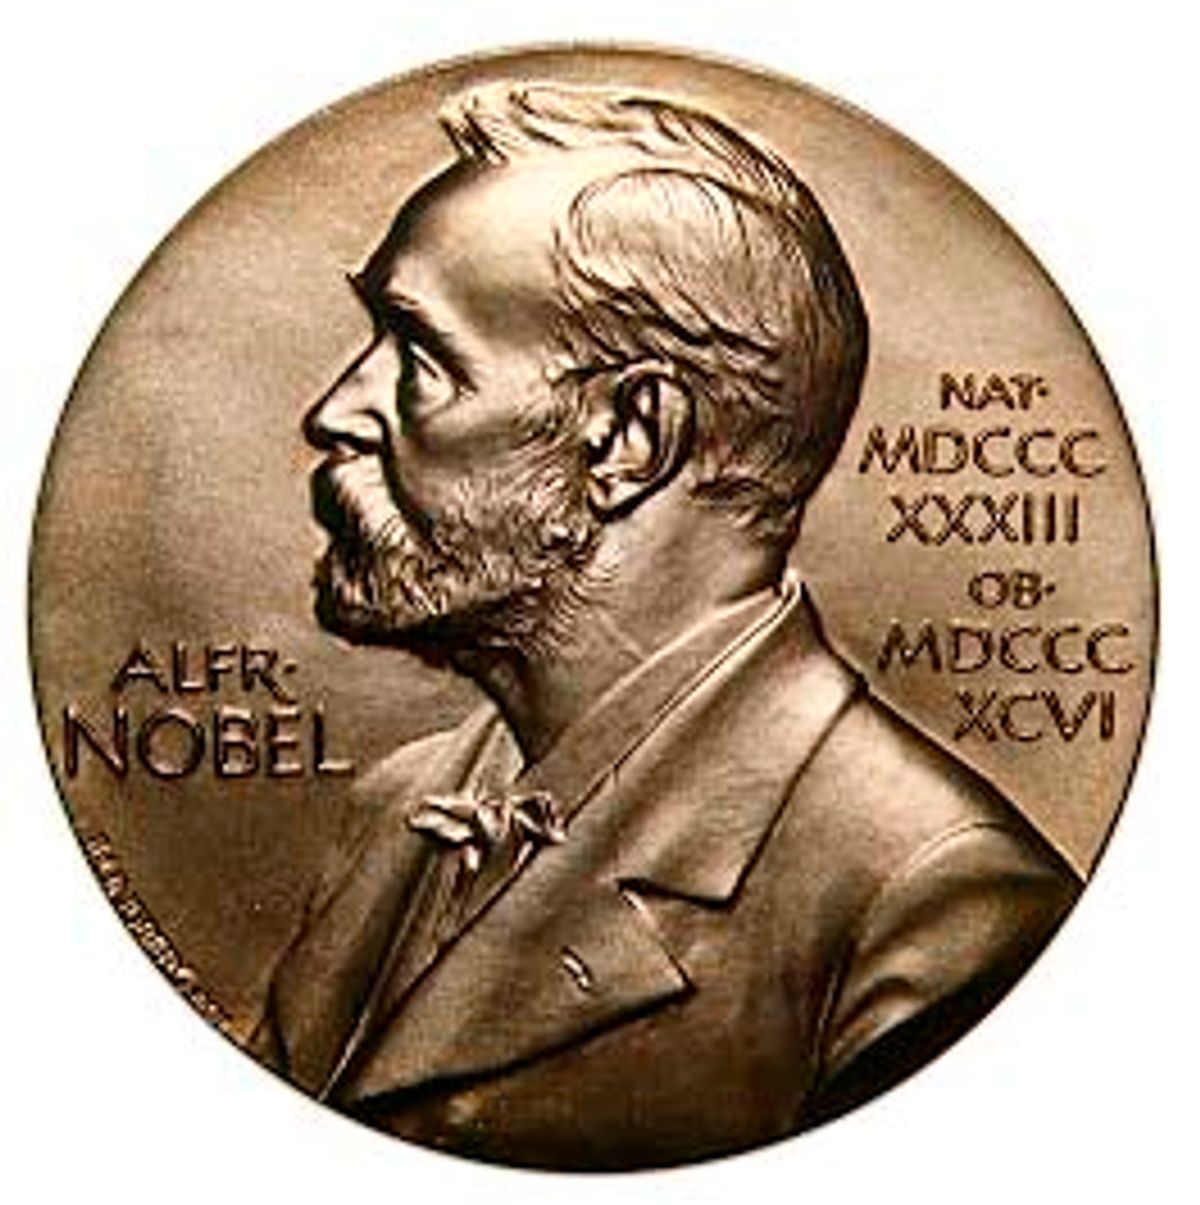 Nanotechnology Sweeps Nobel Prizes